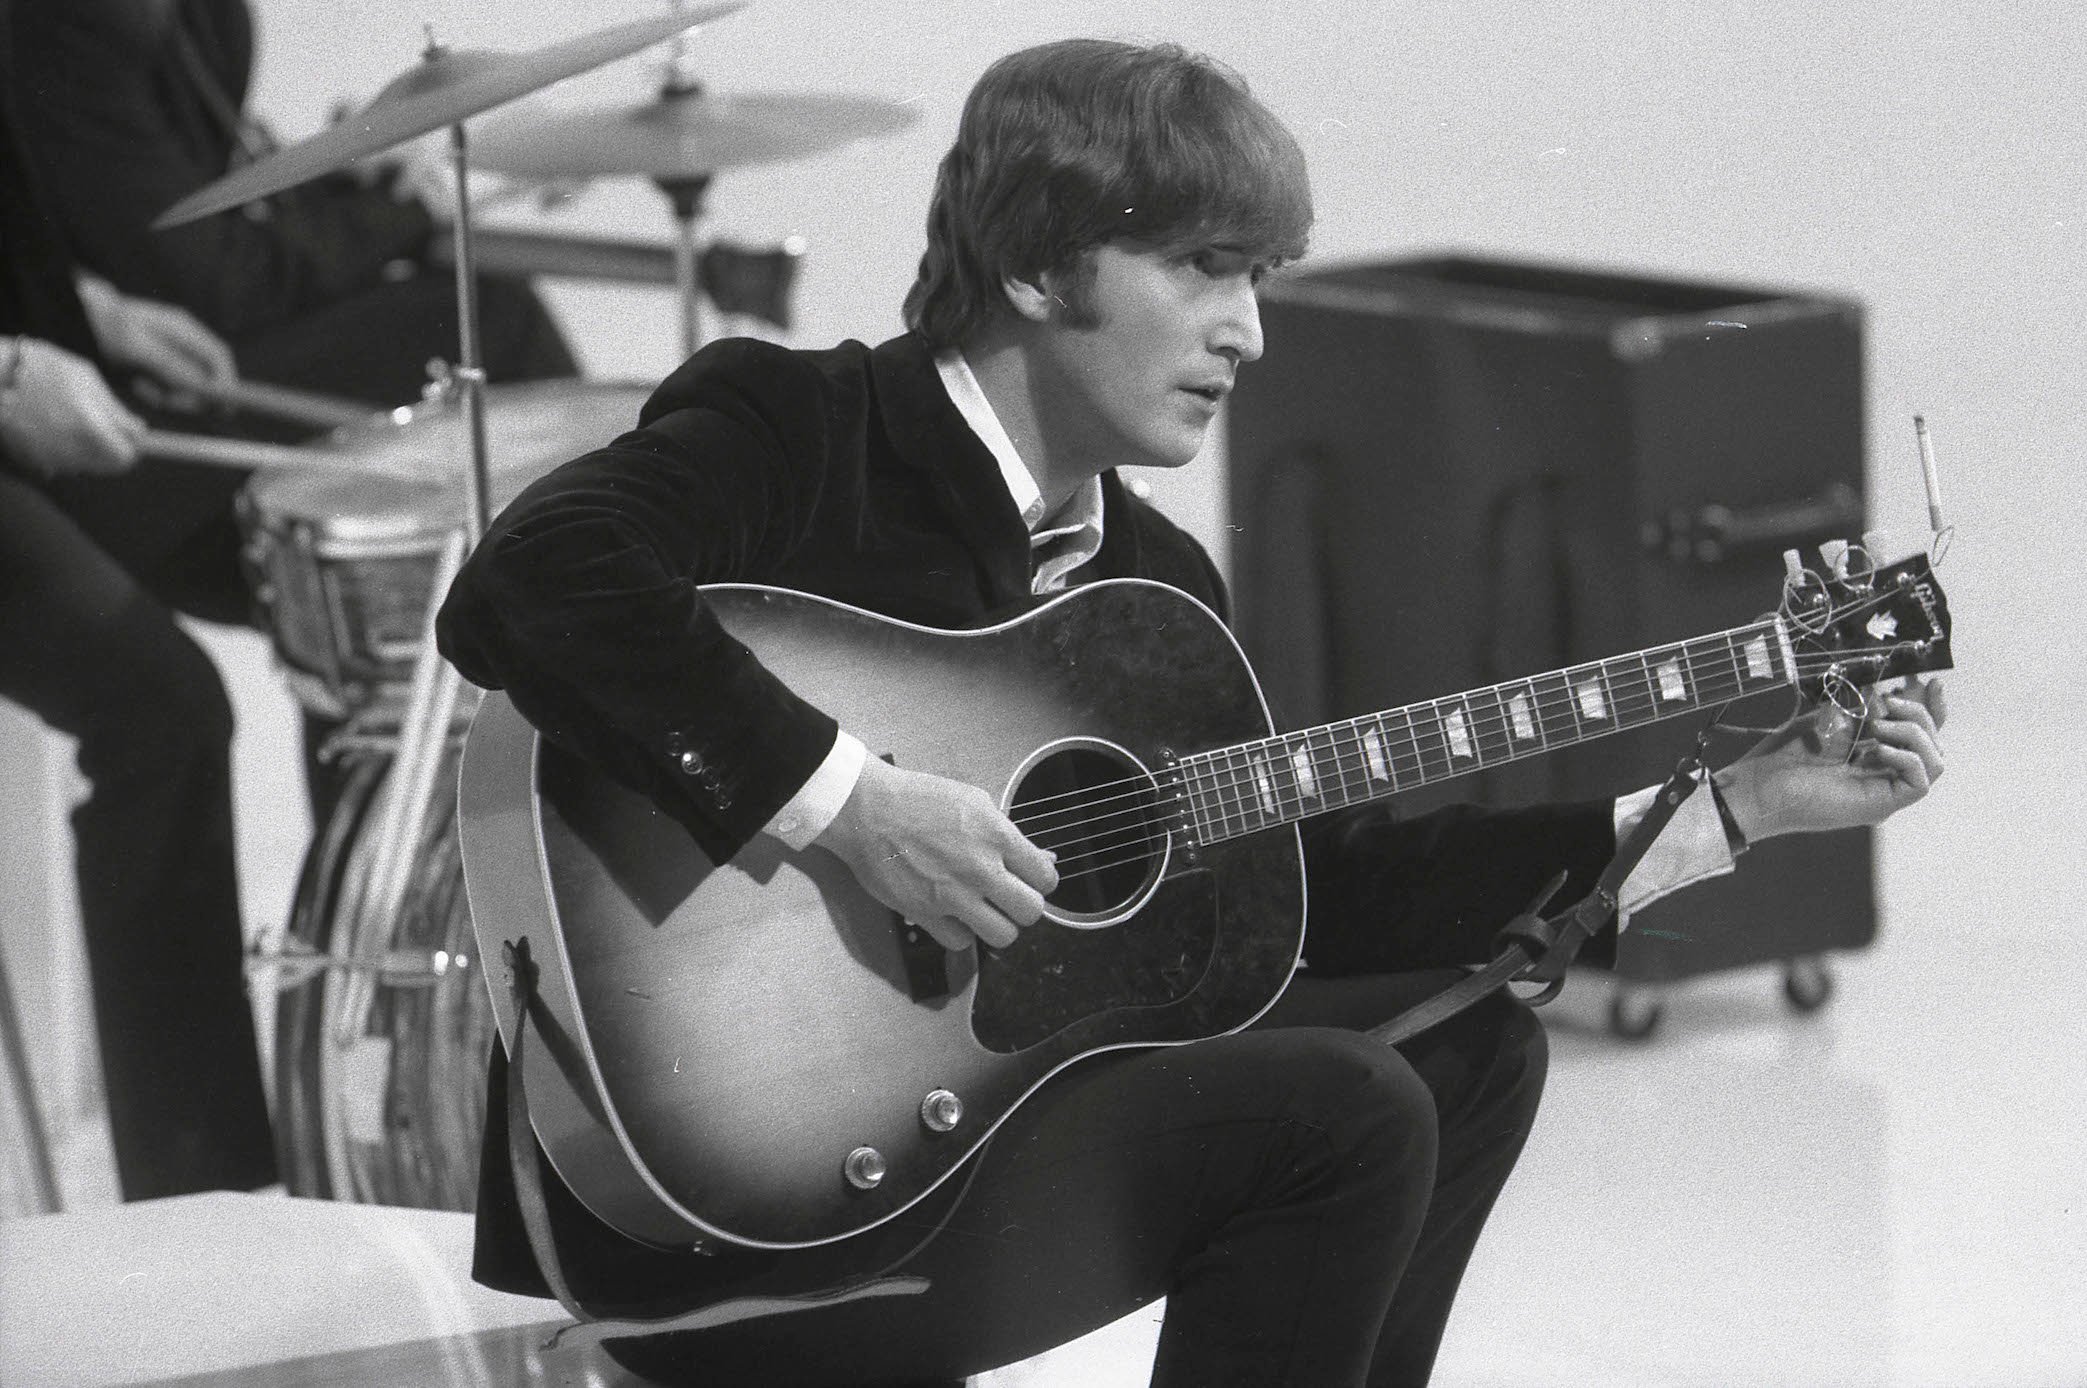 John Lennon rehearses a scene from 'A Hard Day's Night' with The Beatles